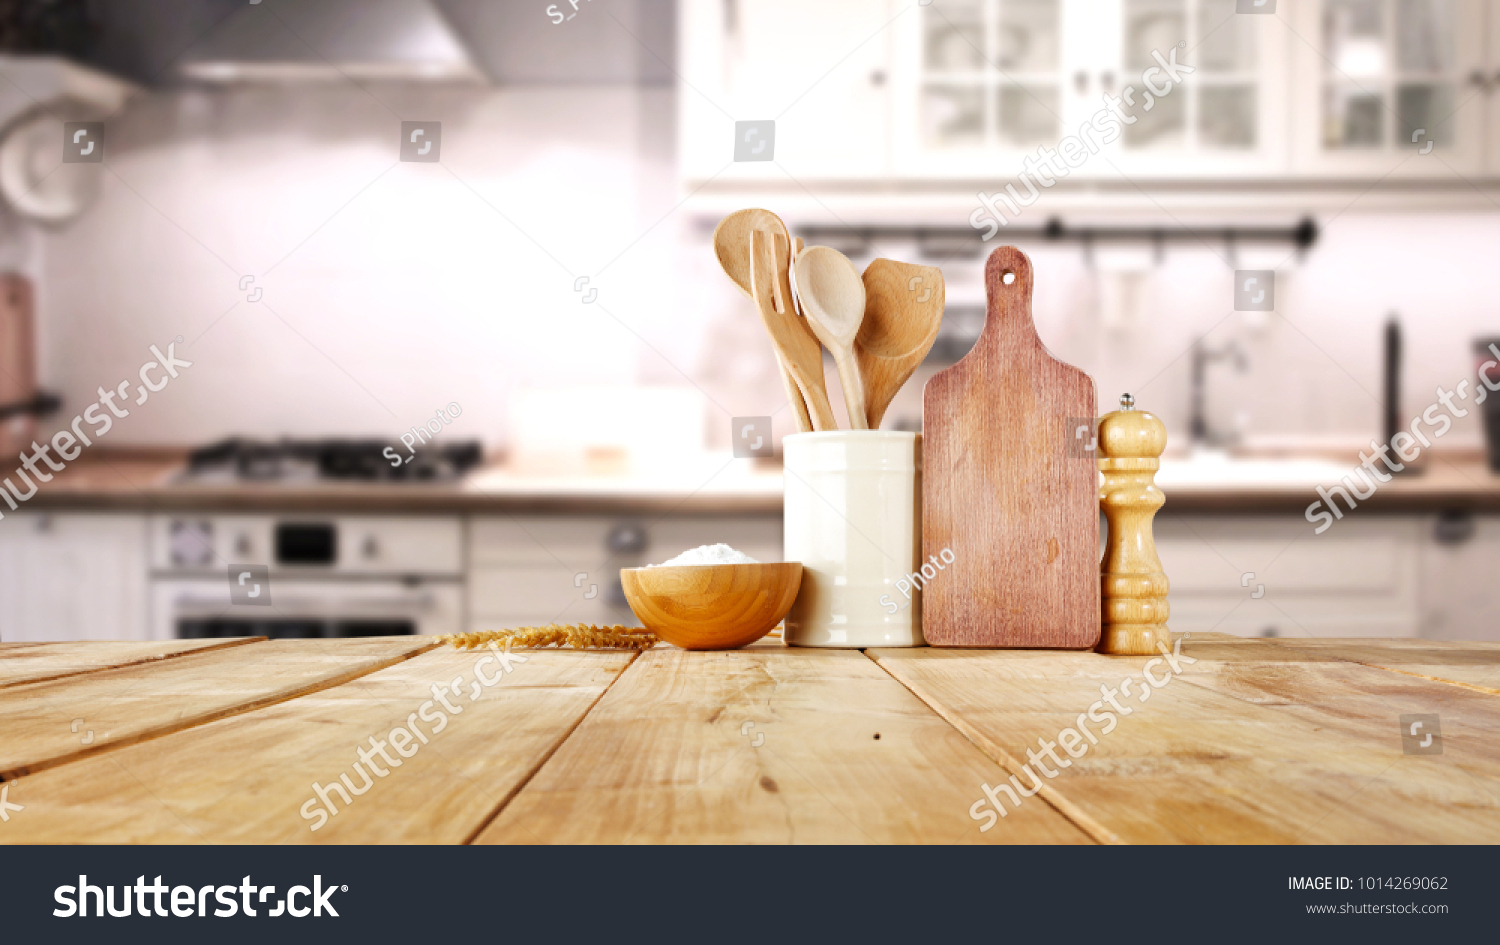 Фон кухни для фотошопа со столом